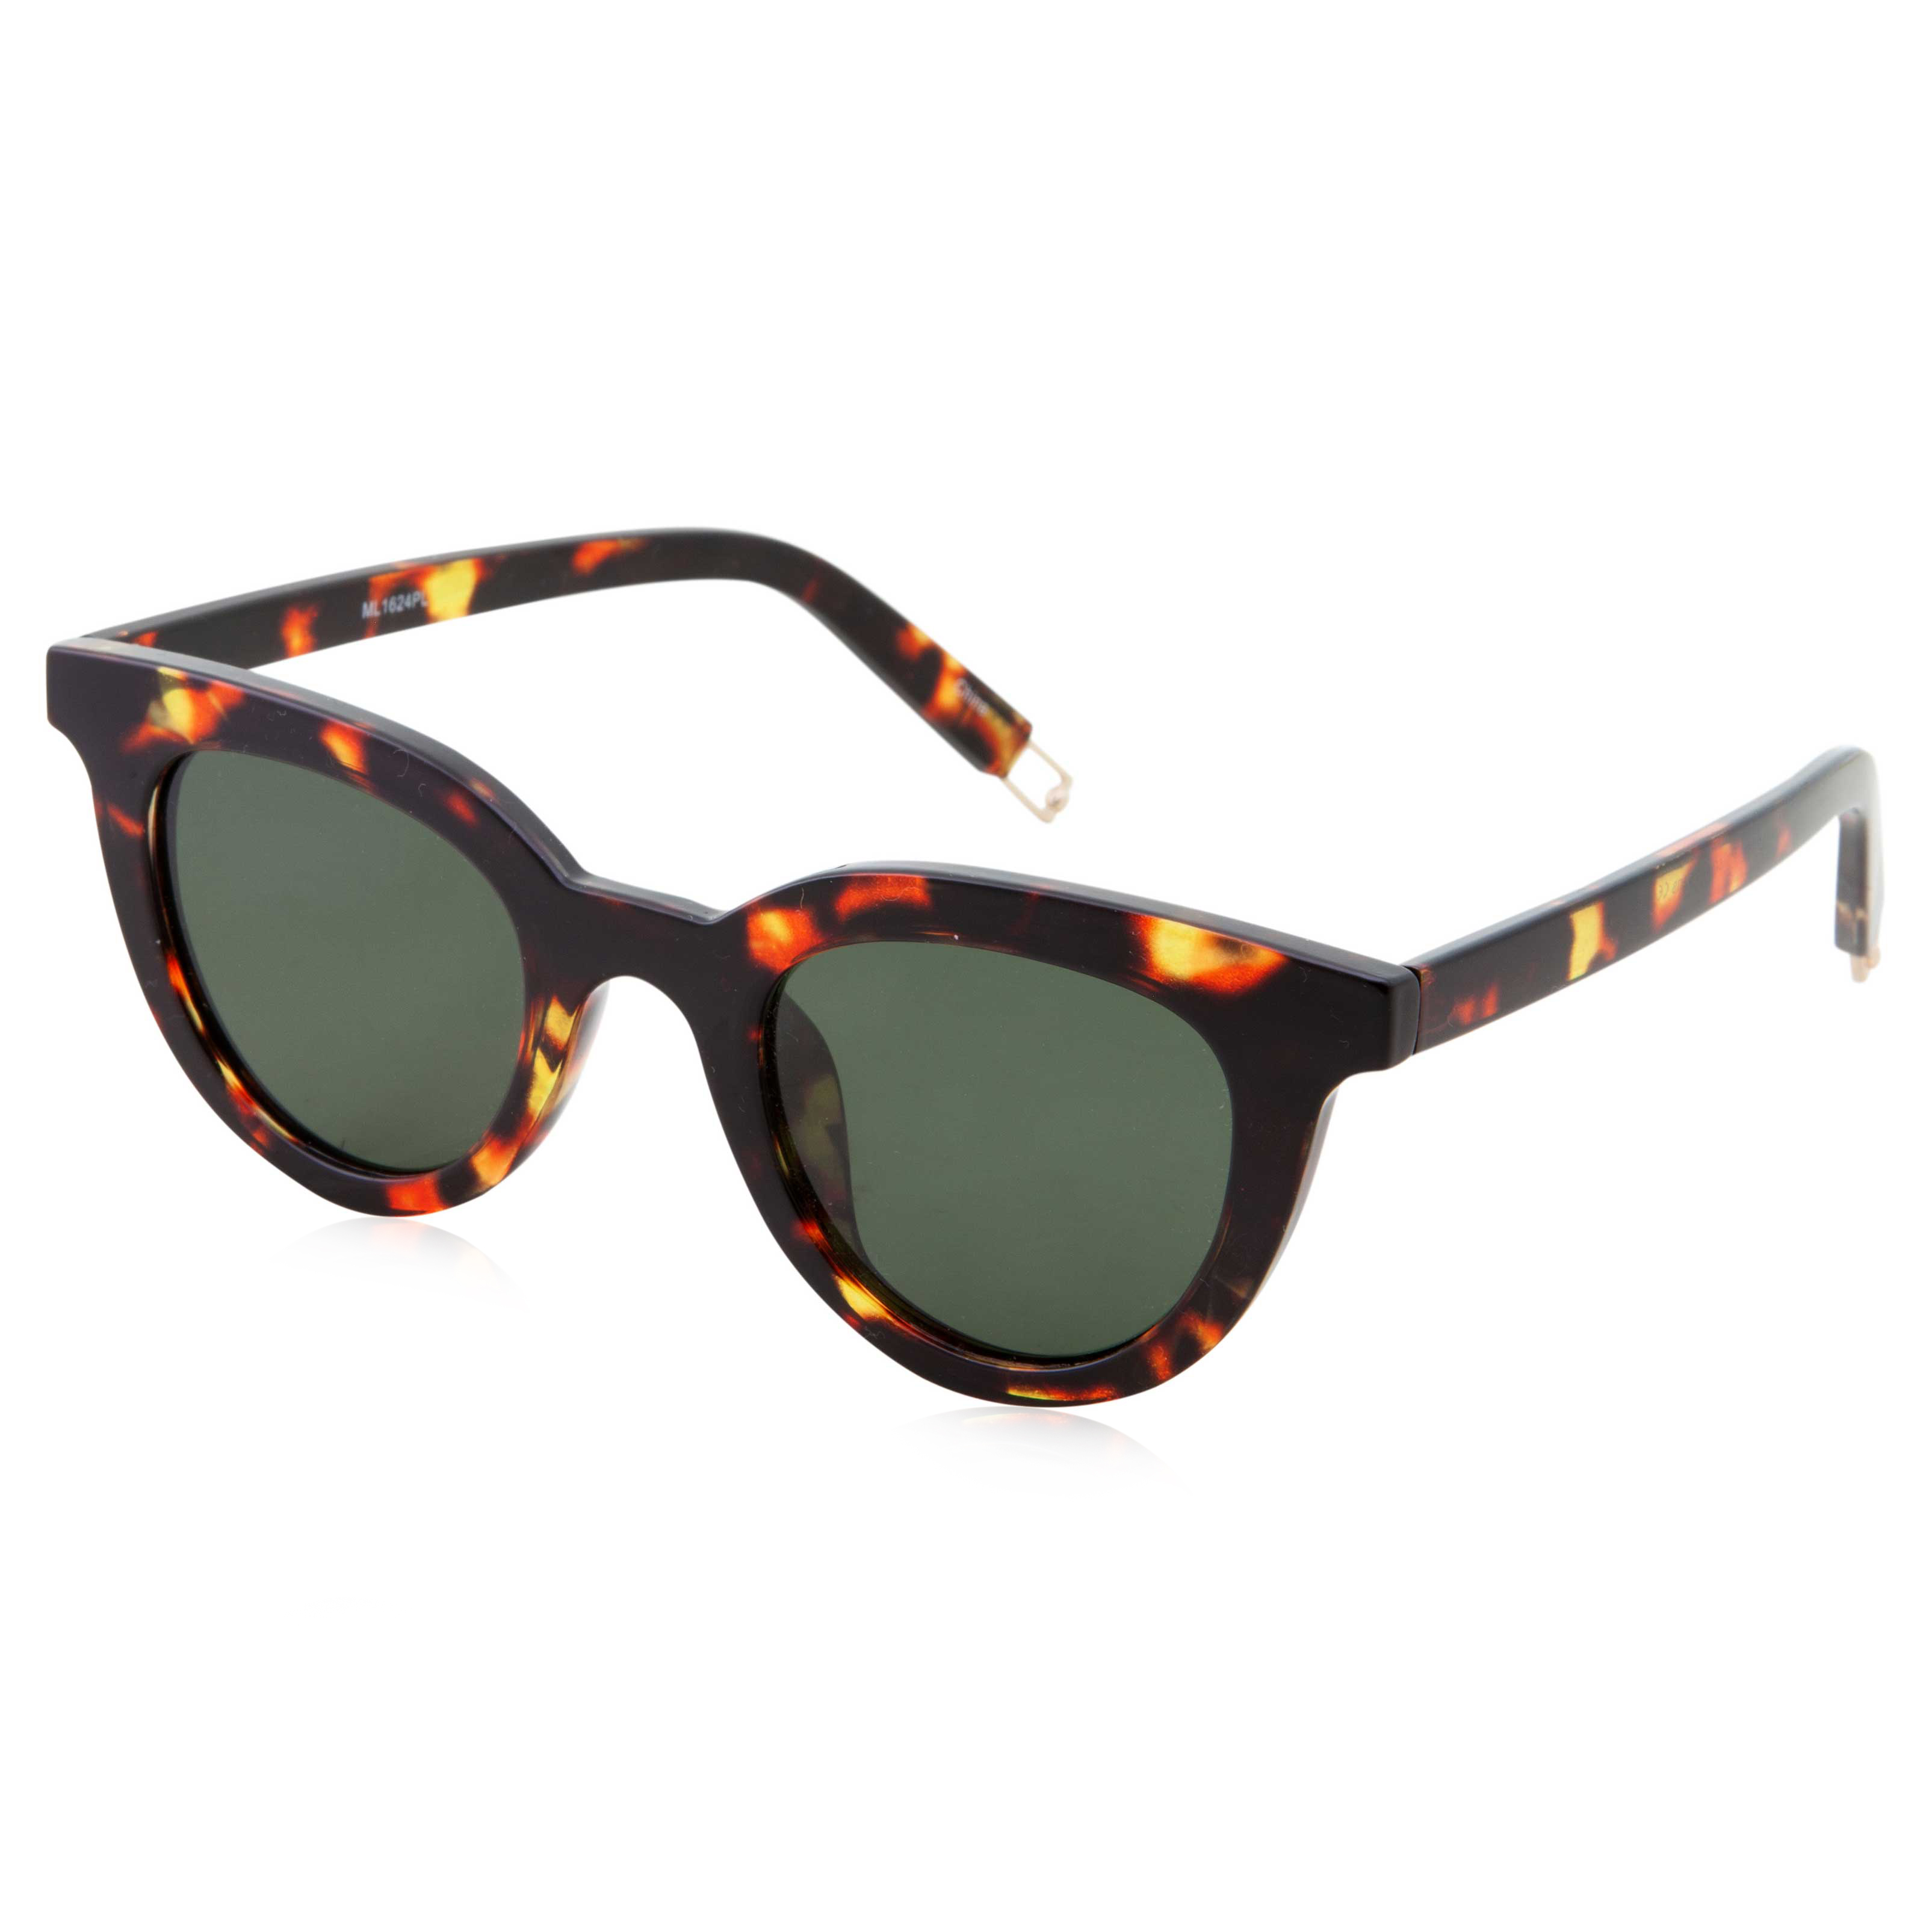 grinderPUNCH Vintage Inspired Horned Rim Tortoise Plastic Frame Round Sunglasses - image 1 of 5